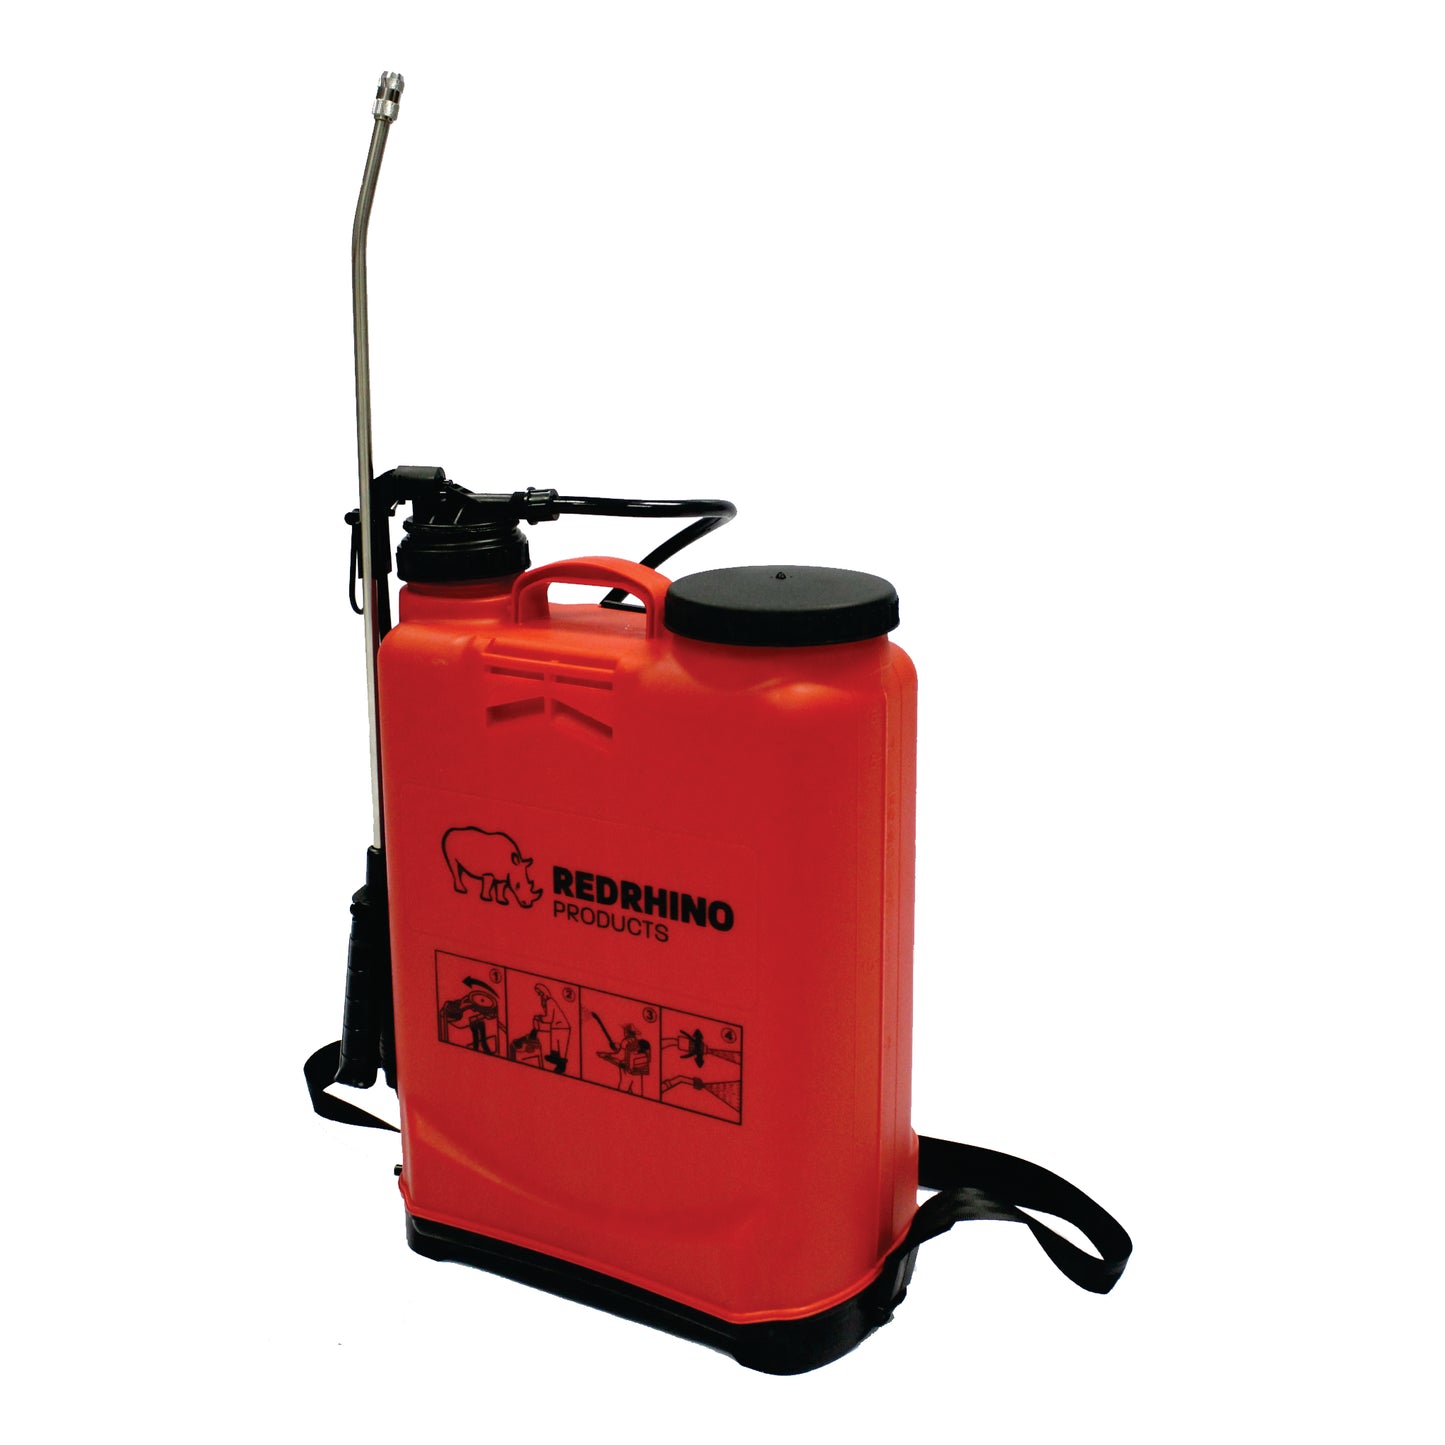 Red Rhino - Knapsack Pressure Sprayer - 16L